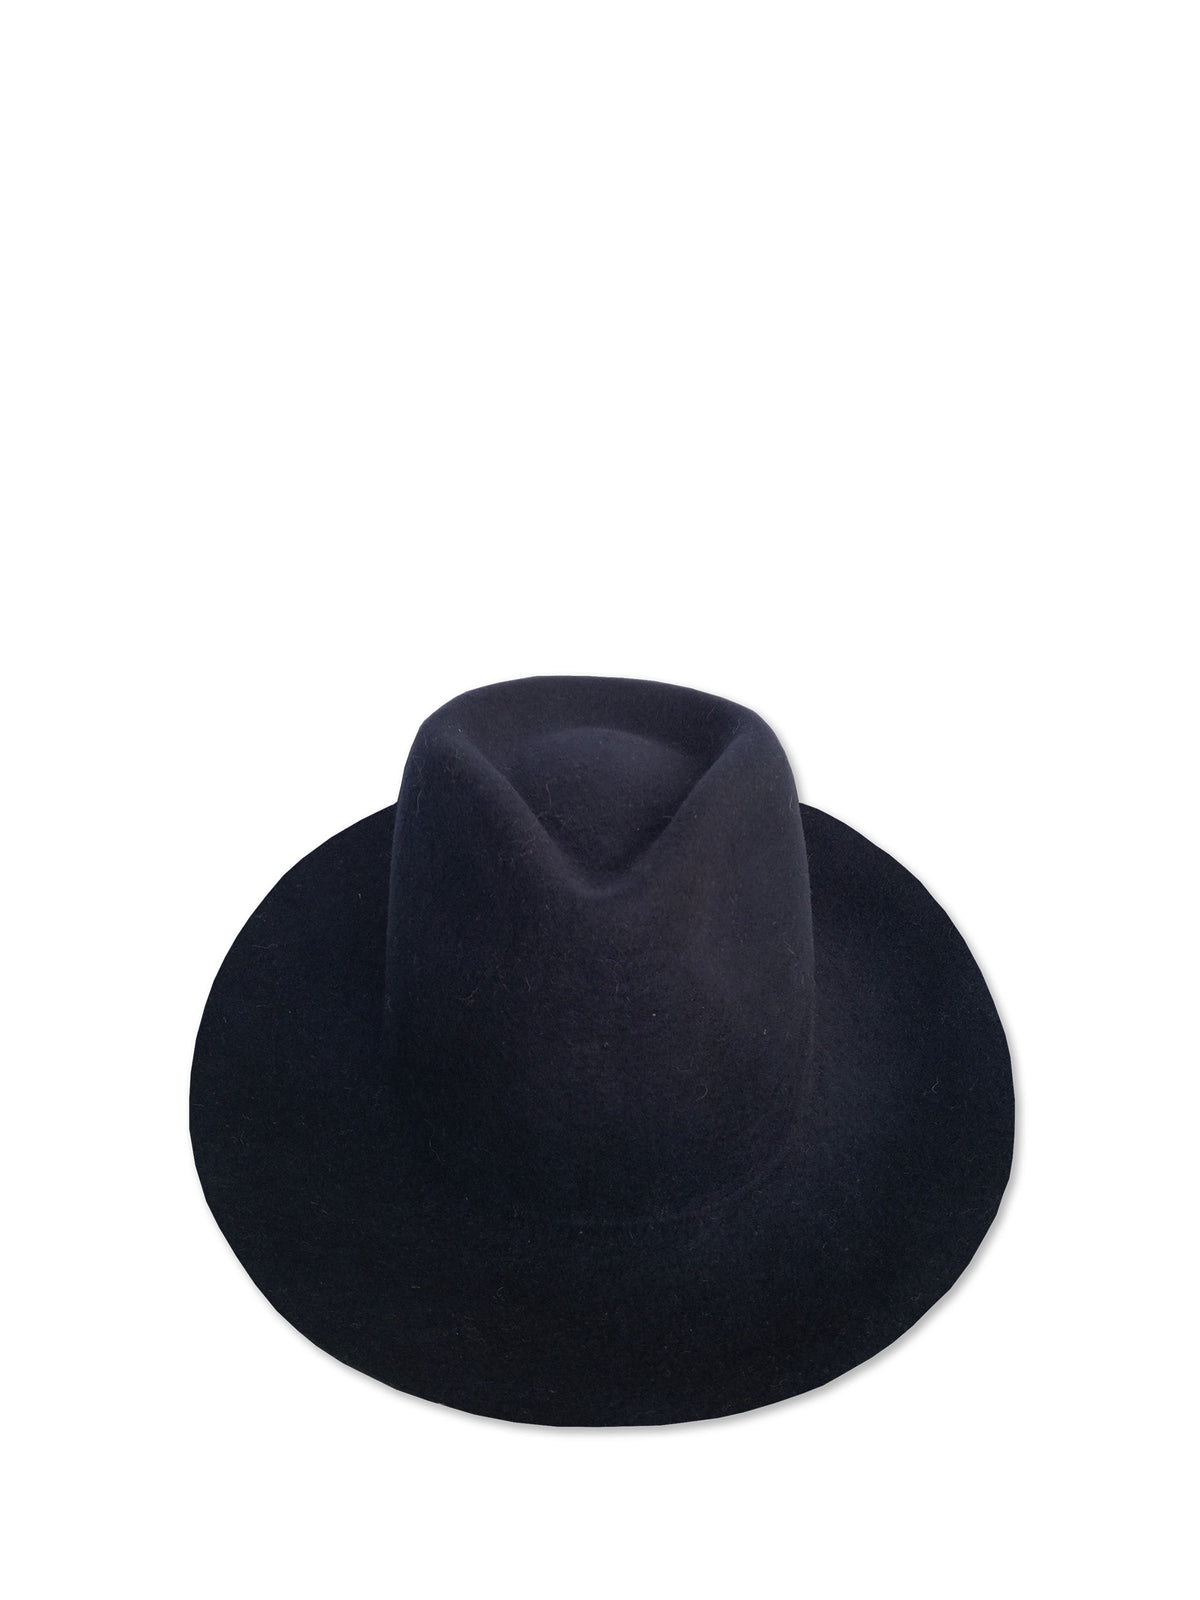 Aspen Hat 08 Navy Blue